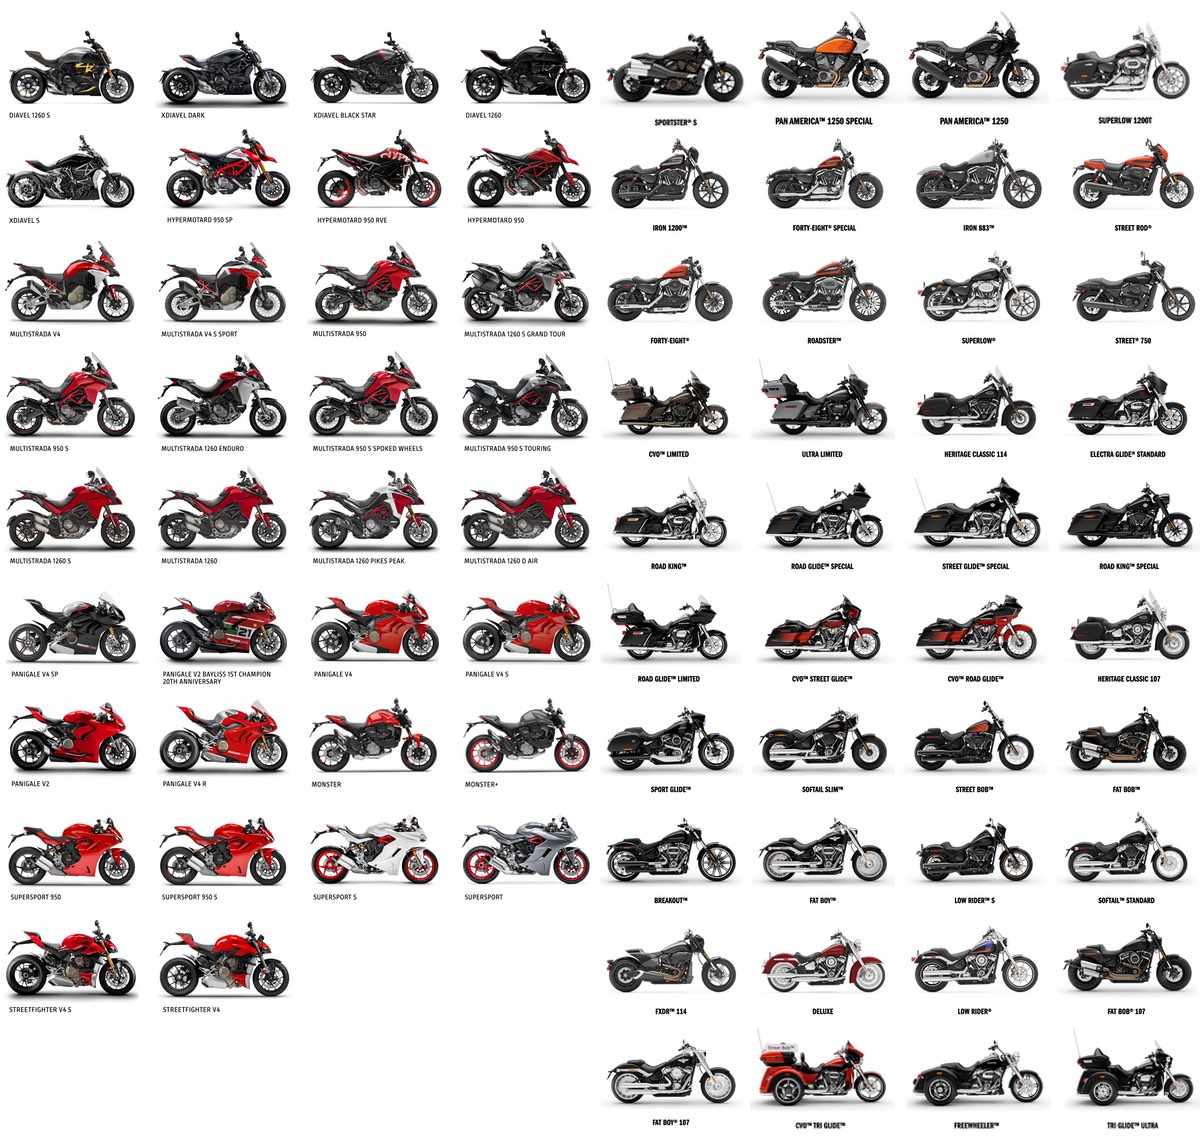 Ducati and Harley-Davidson ranges